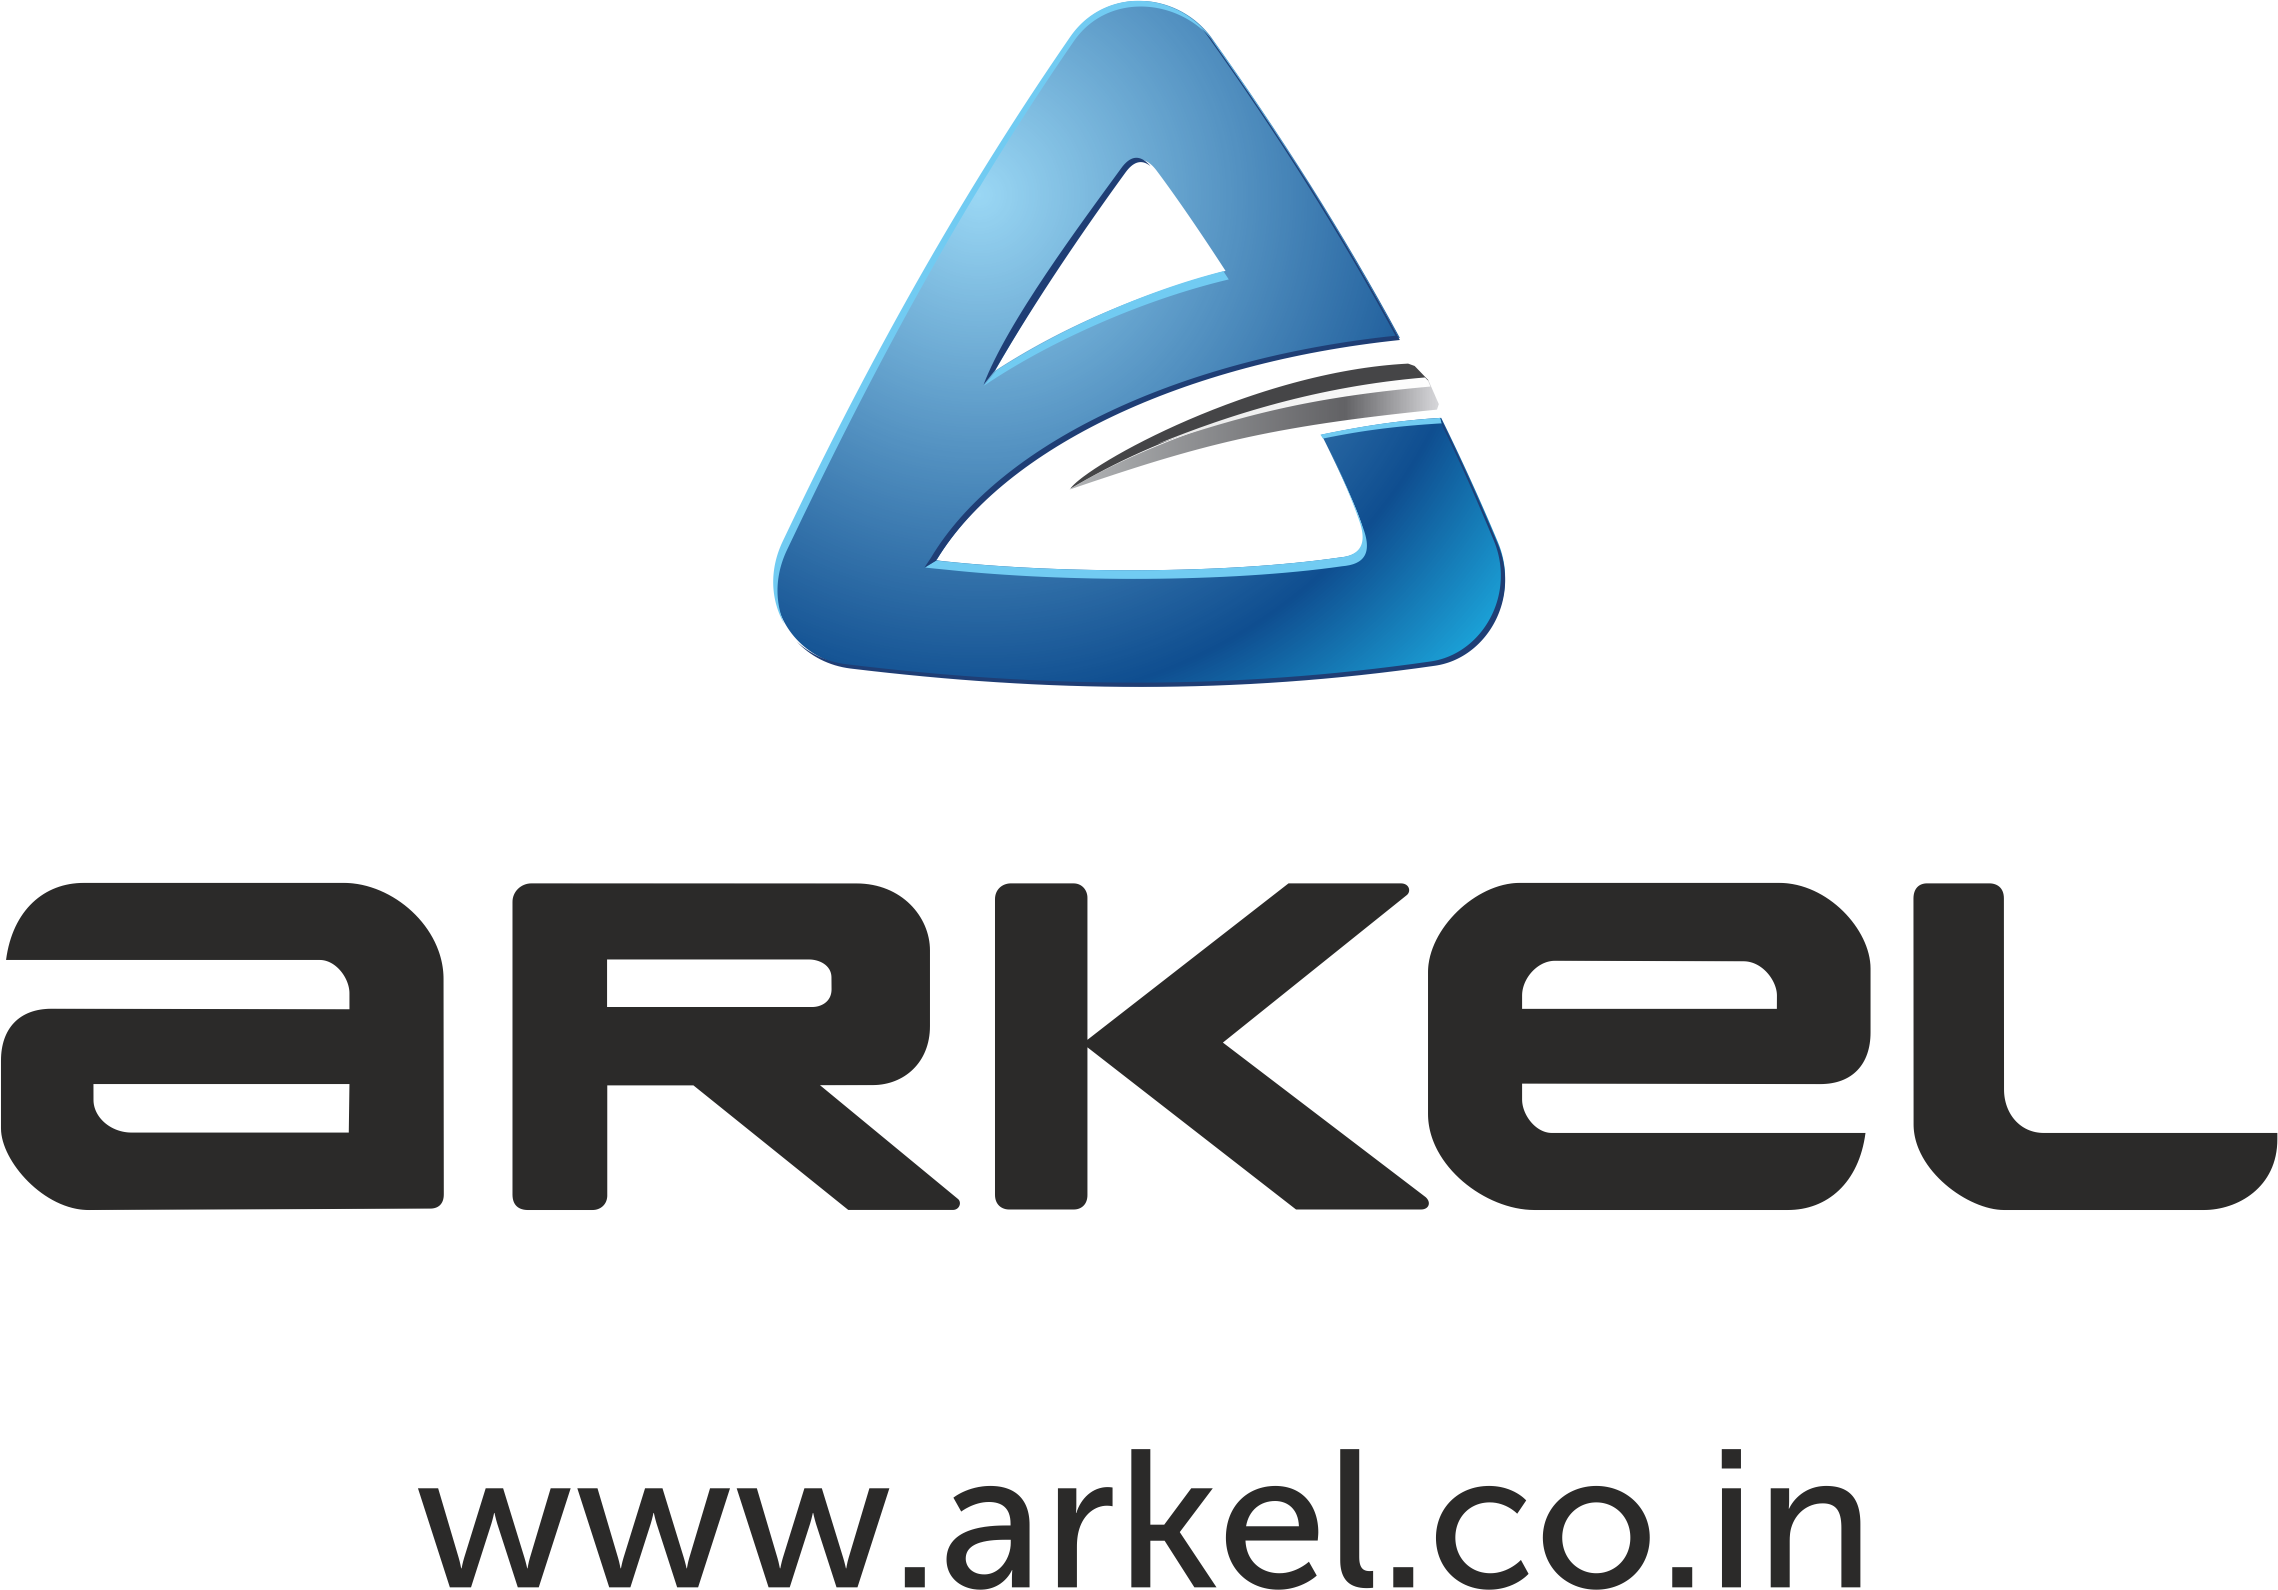 Arkel-logo-color-2